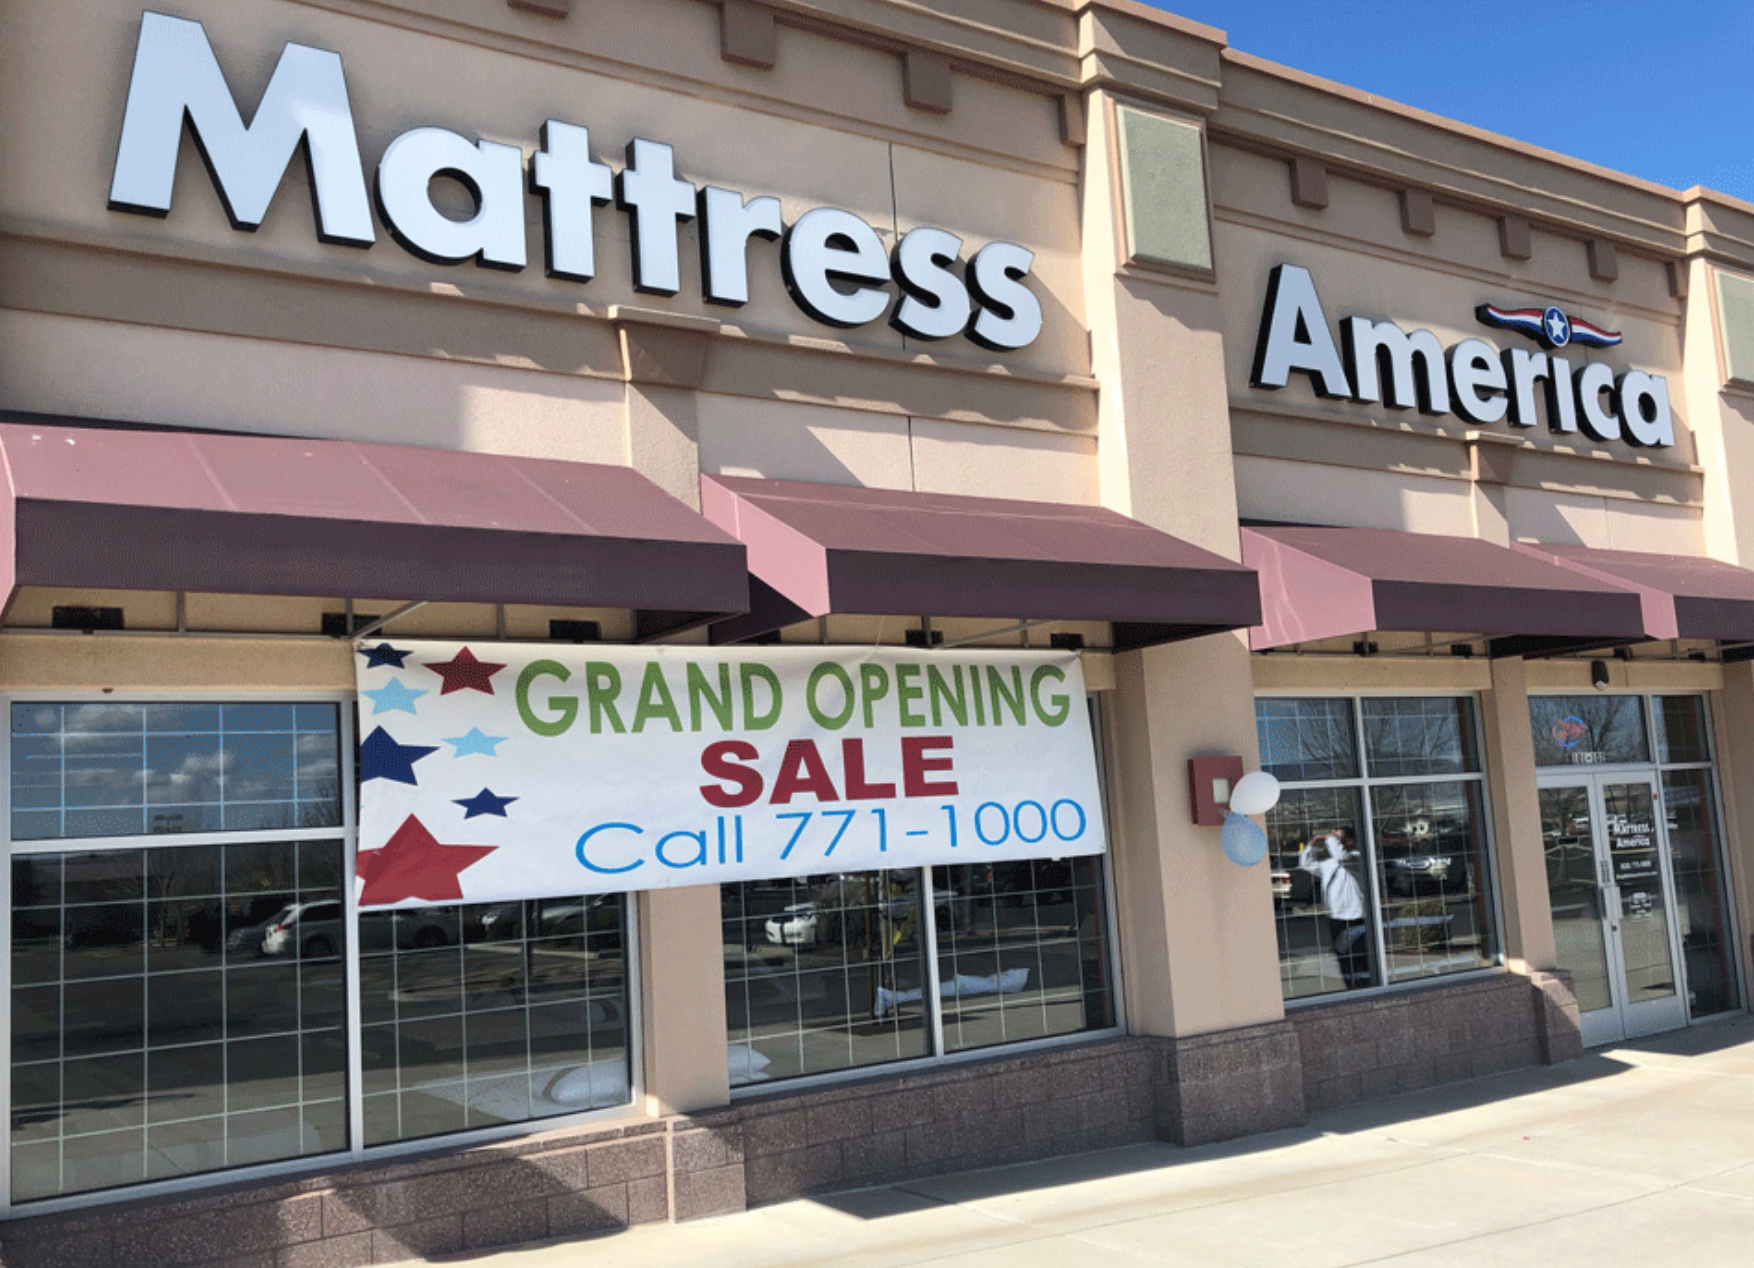 Prescott Valley Welcomes Mattress America